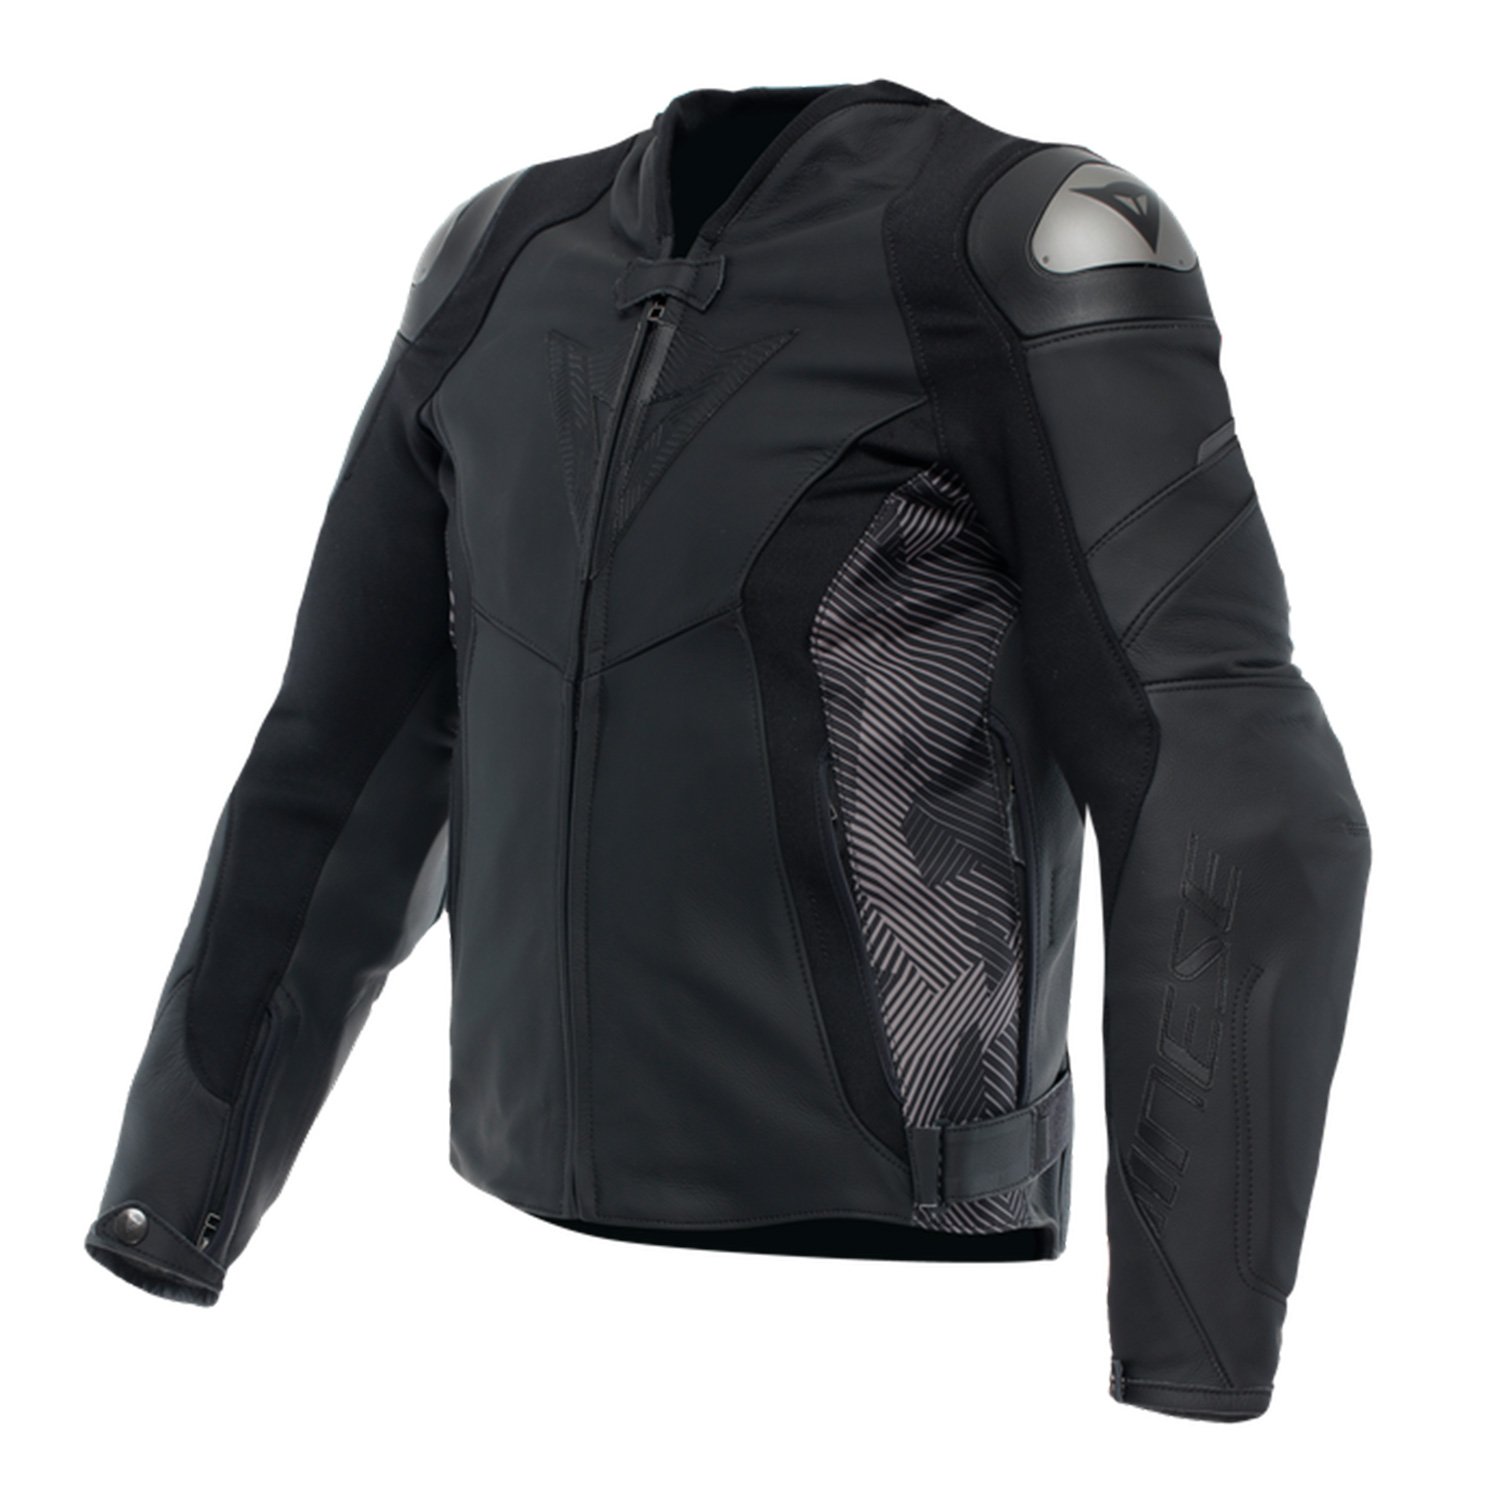 Image of Dainese Avro Leather 5 Jacket Black Anthracite Size 54 ID 8051019639547